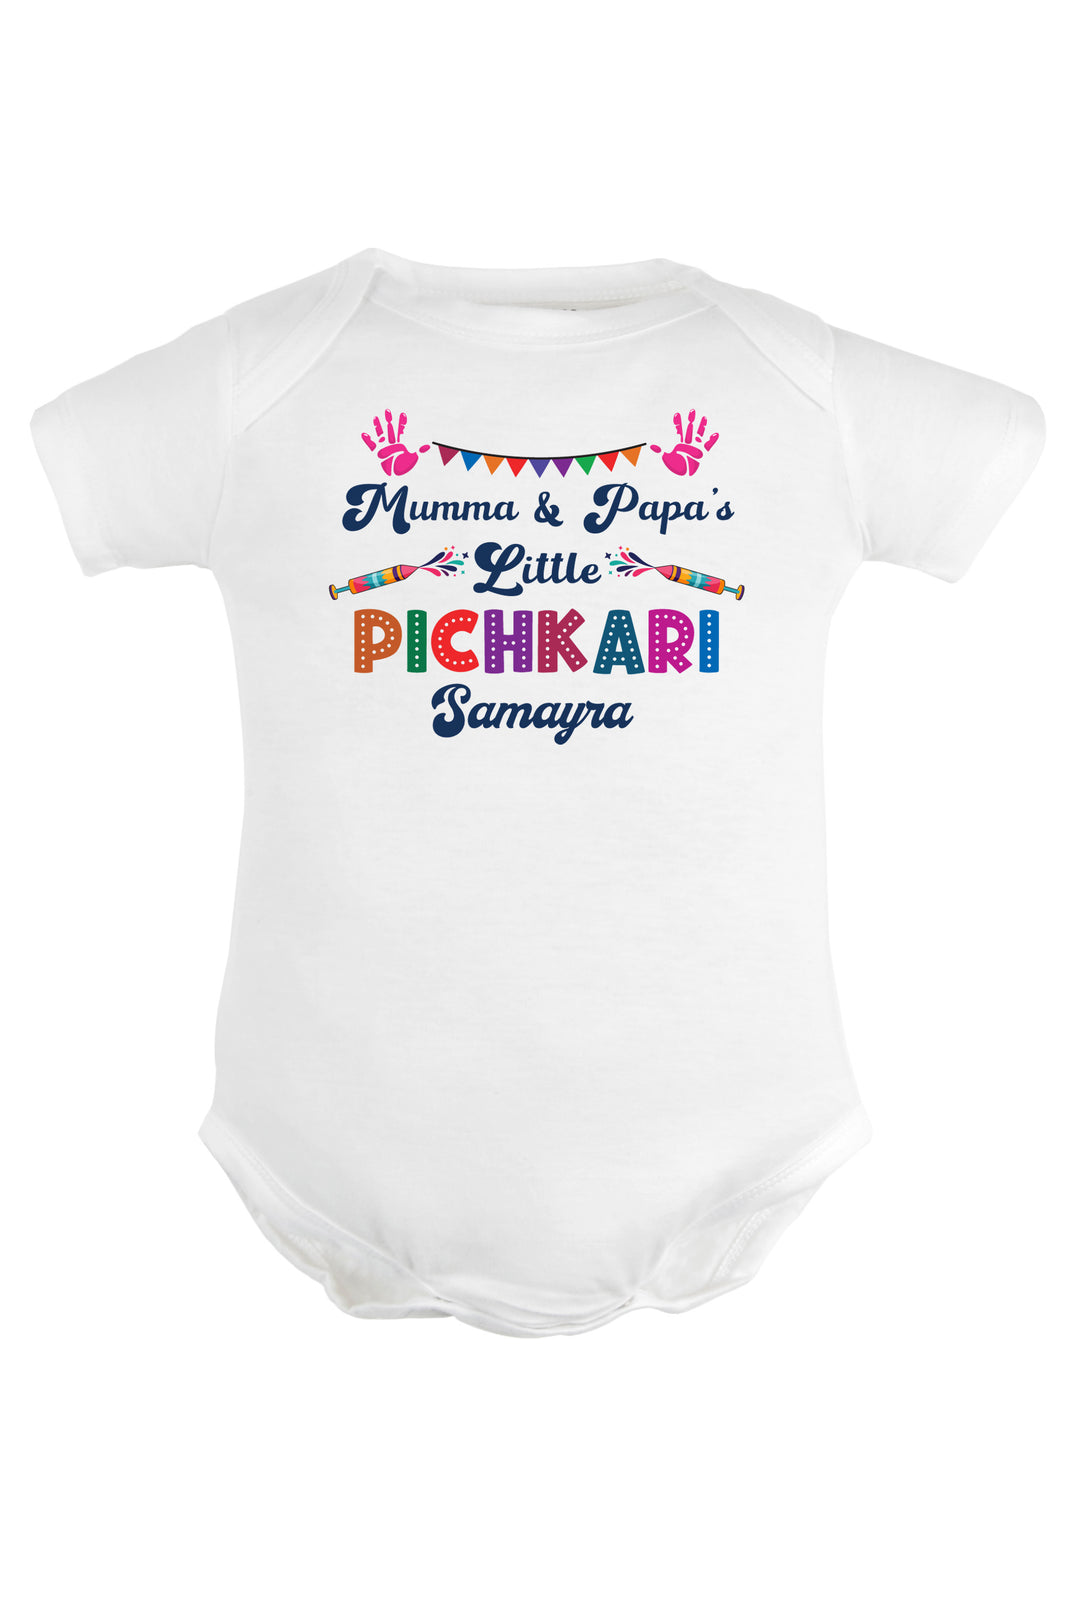 Mumma & Papa Little Pichkari Baby Romper | Onesies w/ Custom Name